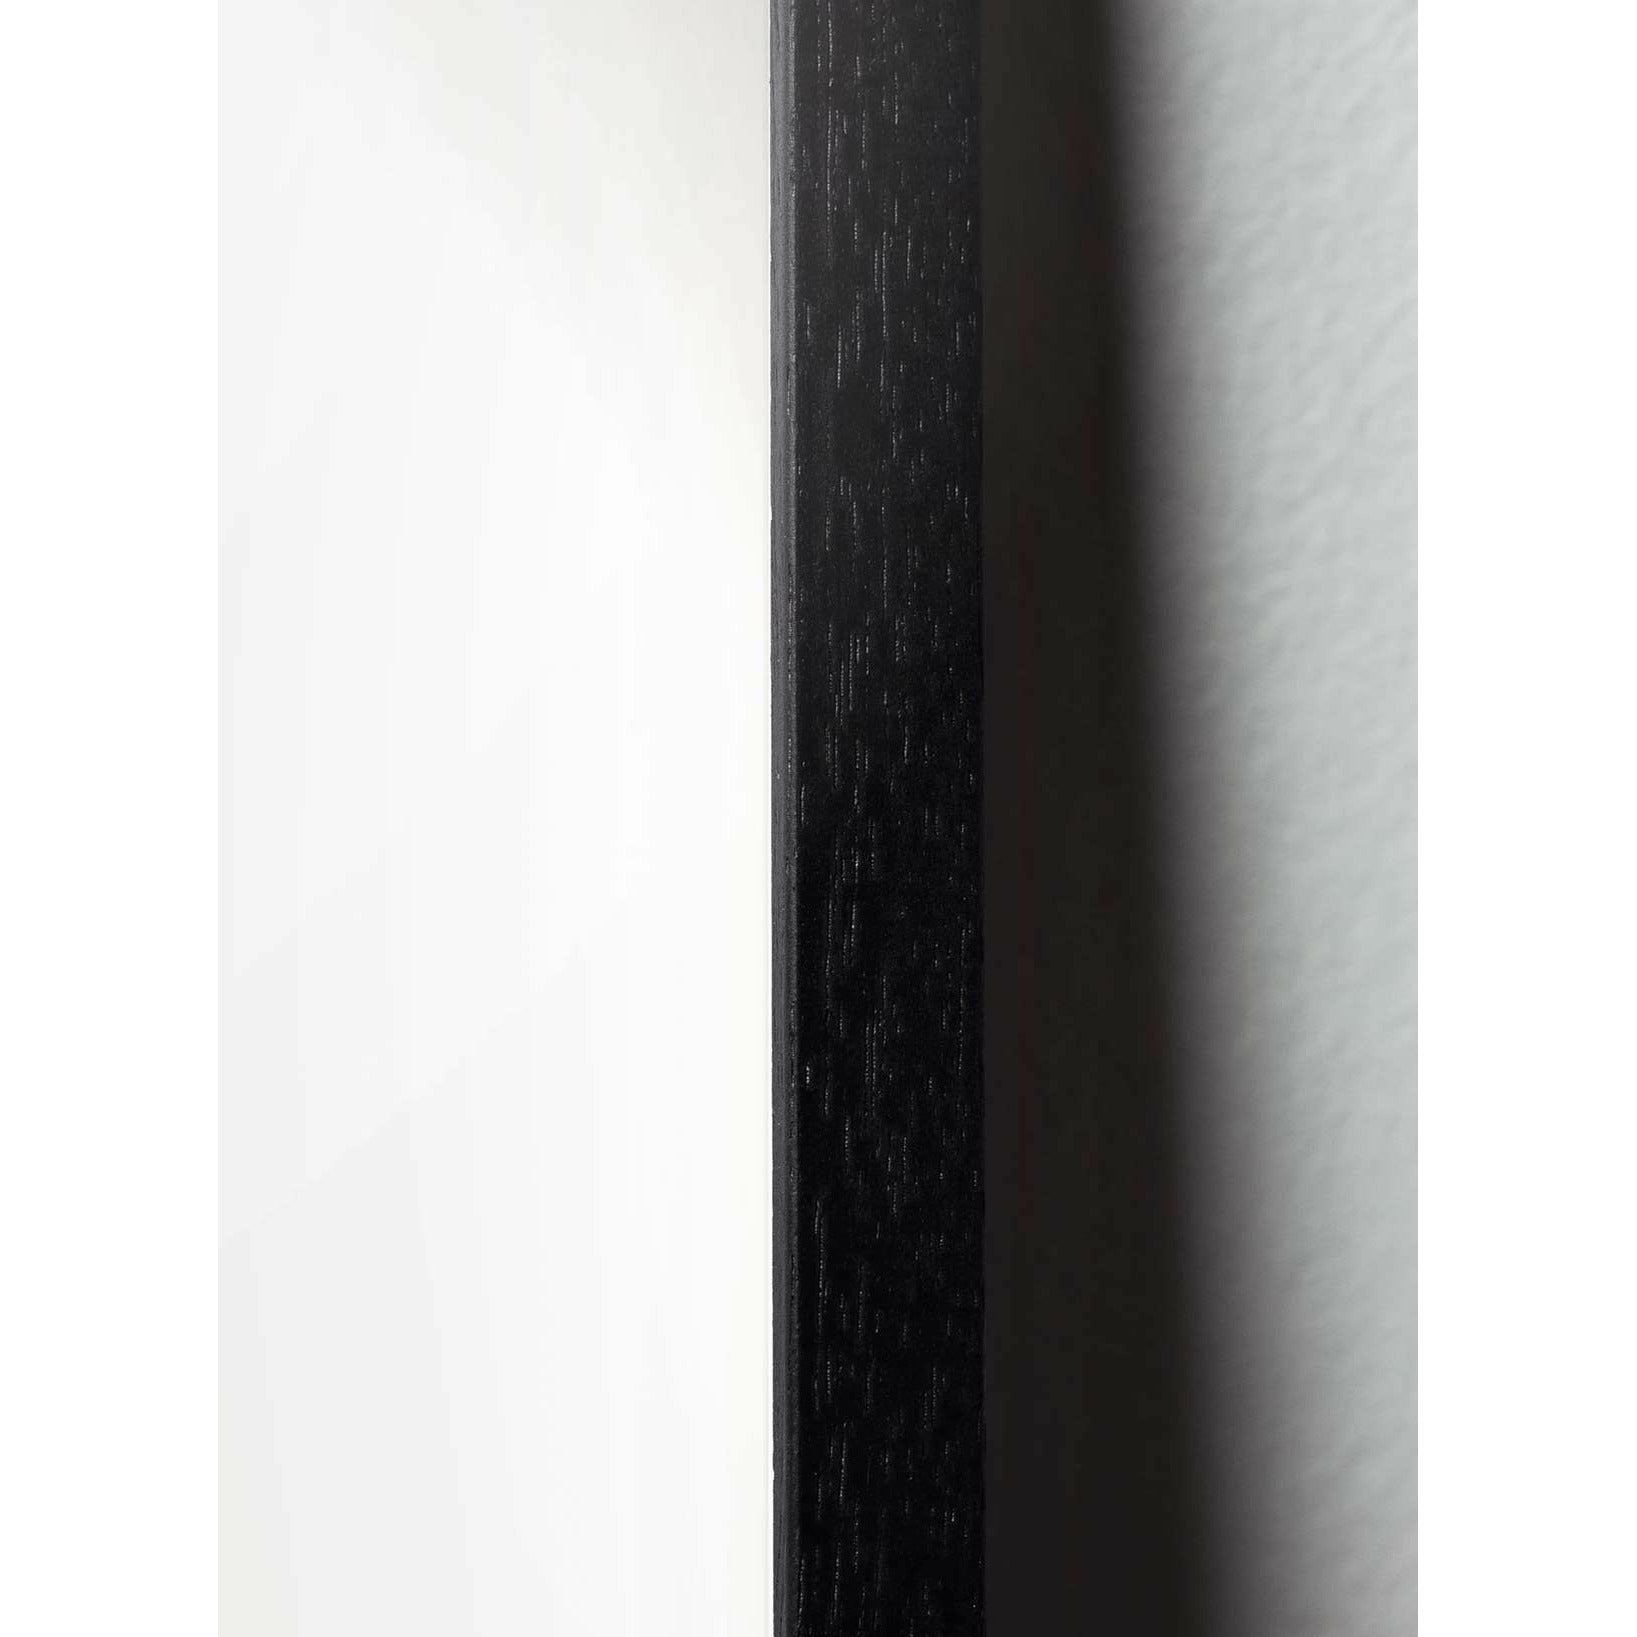 Plakát Eierparade Brainchild, rám vyrobený z černého lakovaného dřeva, 50x70 cm